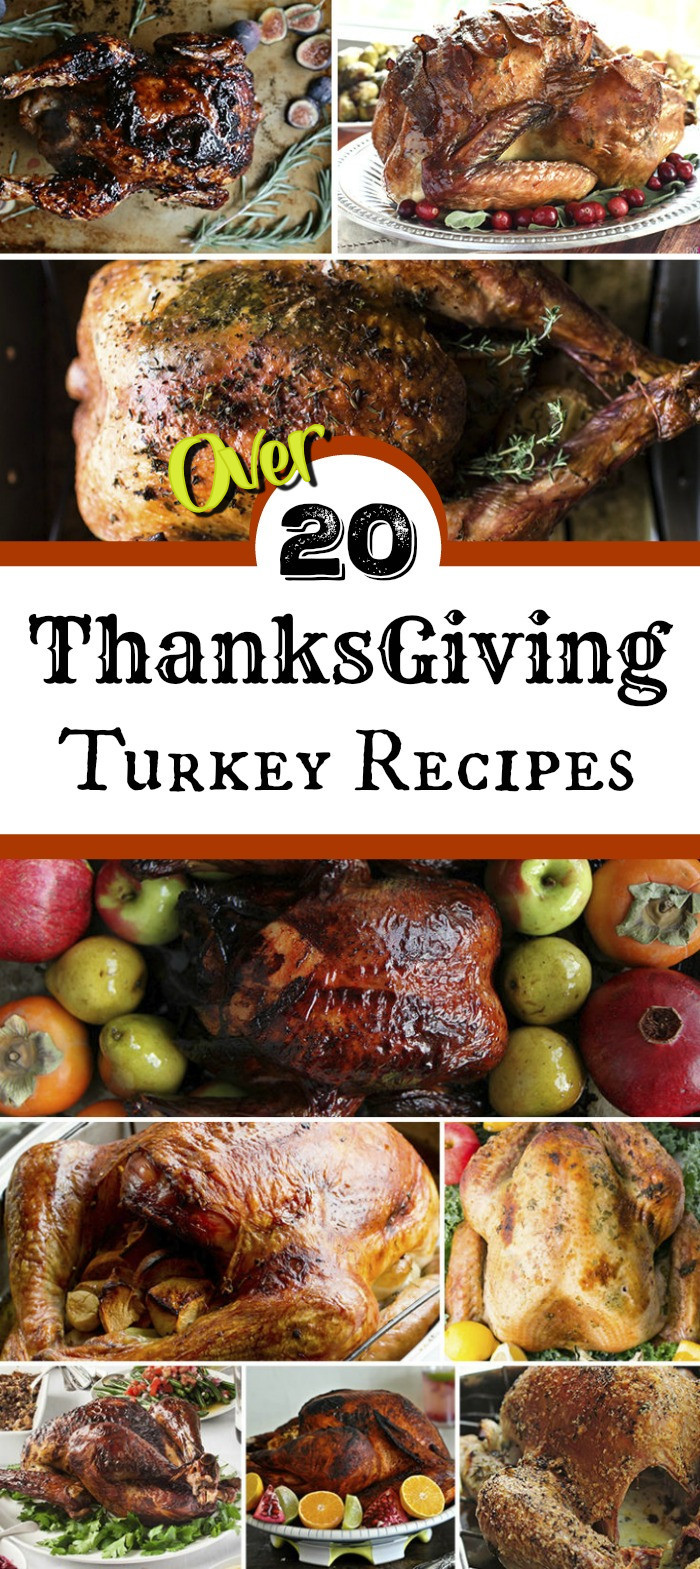 Turkey Recipe Thanksgiving
 Thanksgiving Turkey Recipes for the Best Thanksgiving